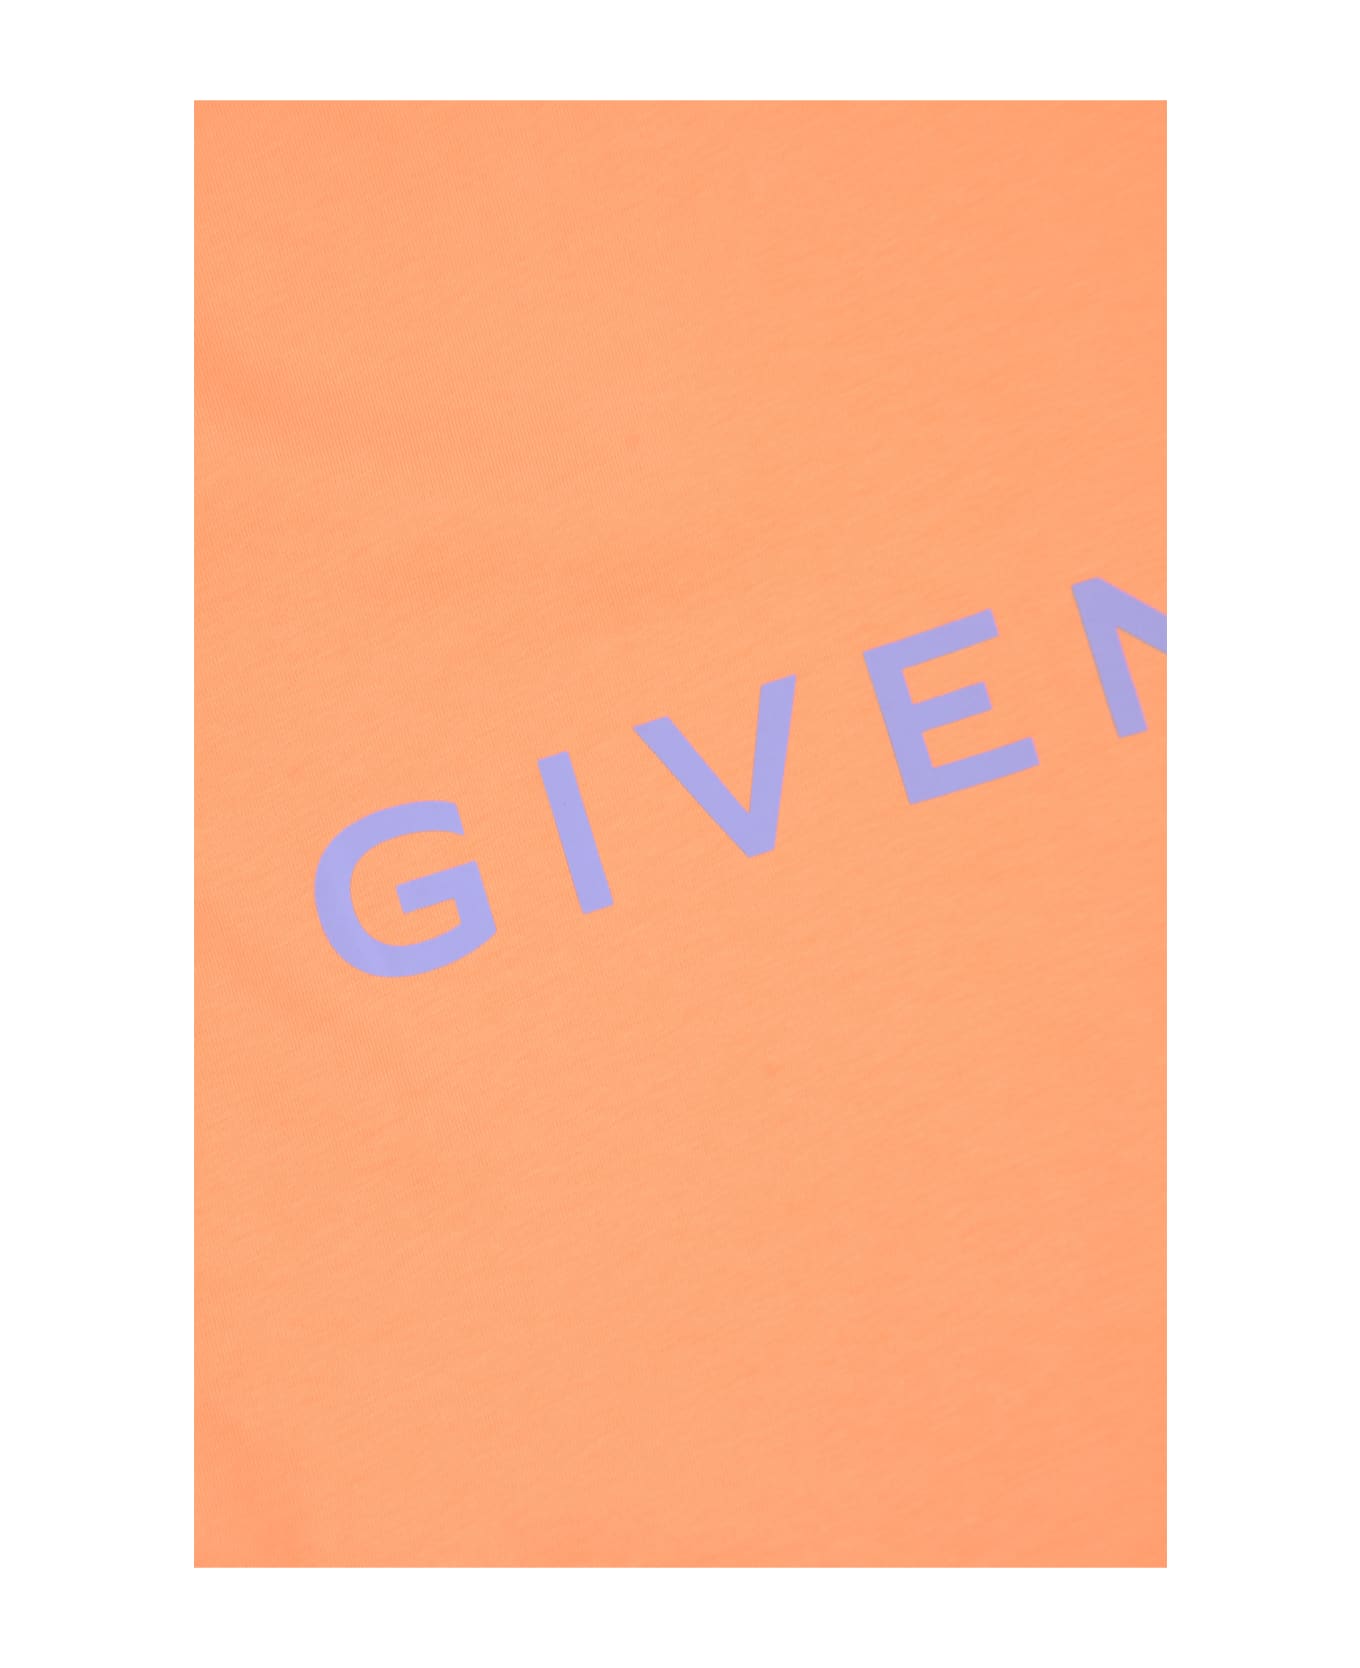 Givenchy Logo Print Regular T-shirt - Orange Tシャツ＆ポロシャツ